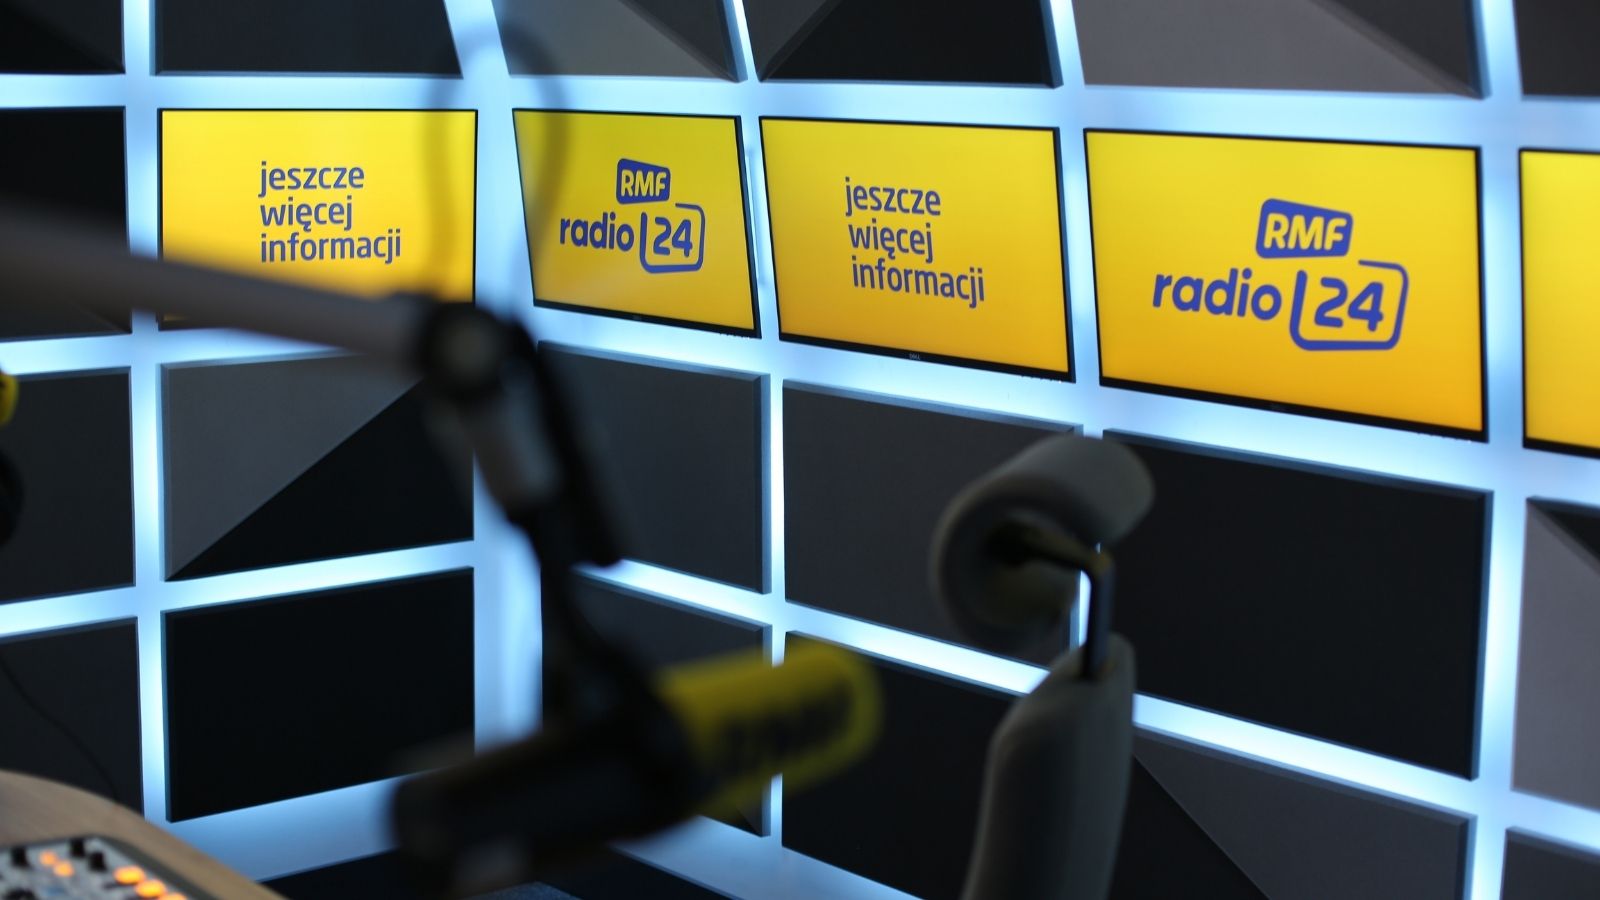 Startuje nowe radio informacyjne Media mediarun rmf24